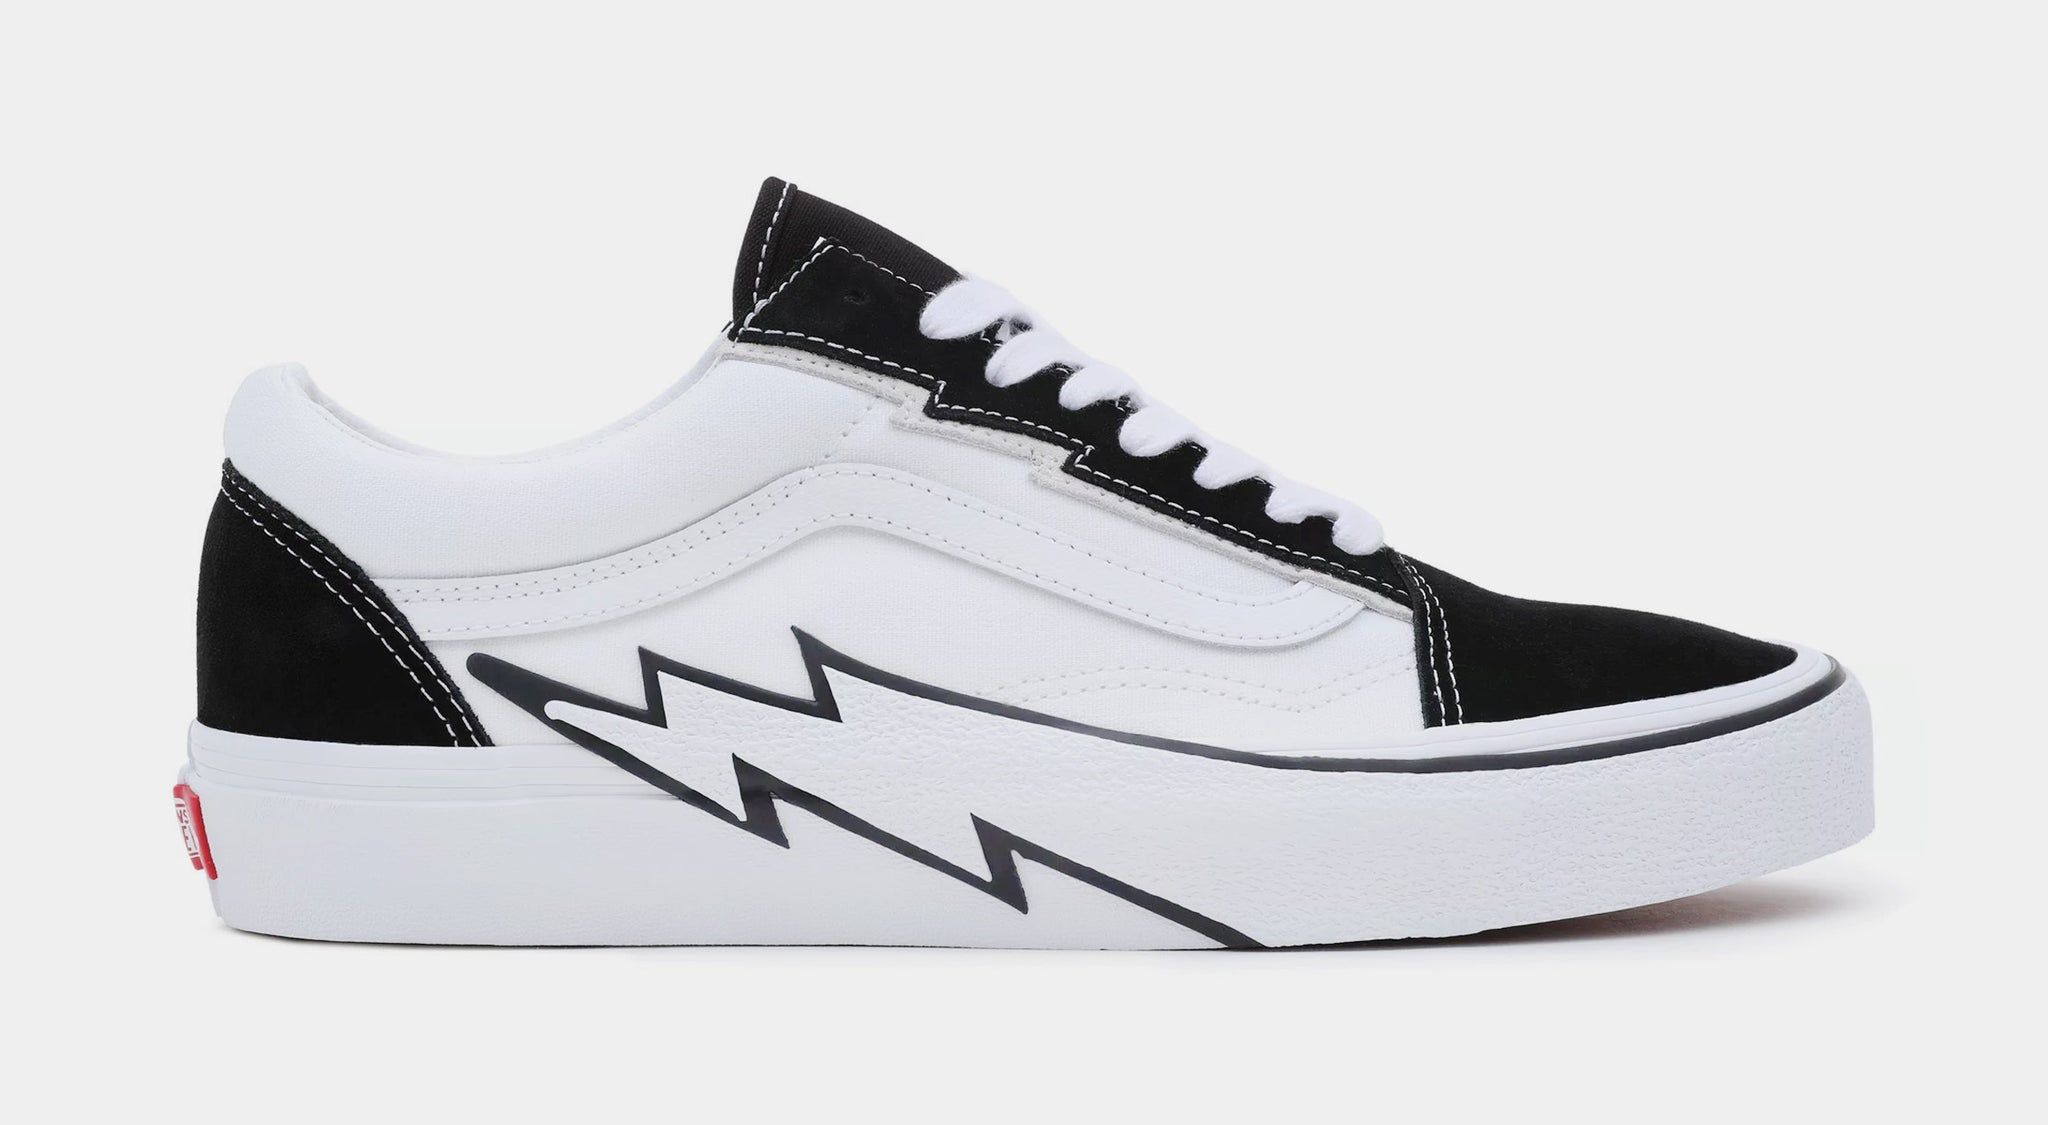 Vans Men's Old Skool Sneaker - Black/White